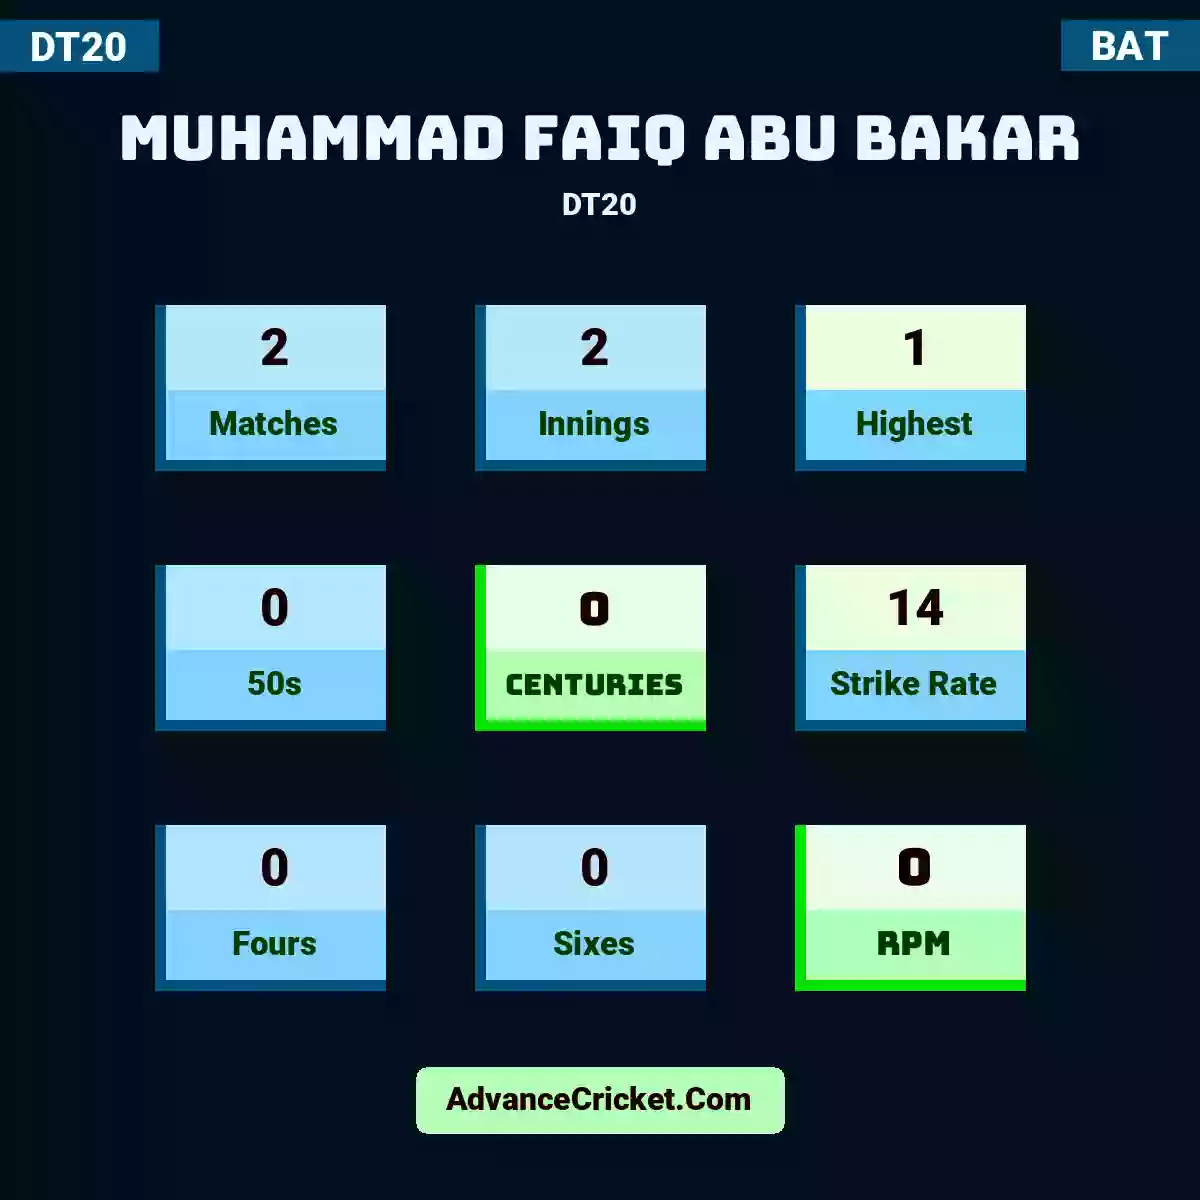 Muhammad Faiq Abu Bakar DT20 , Muhammad Faiq Abu Bakar played 2 matches, scored 1 runs as highest, 0 half-centuries, and 0 centuries, with a strike rate of 14. M.Faiq.Abu.Bakar hit 0 fours and 0 sixes, with an RPM of 0.